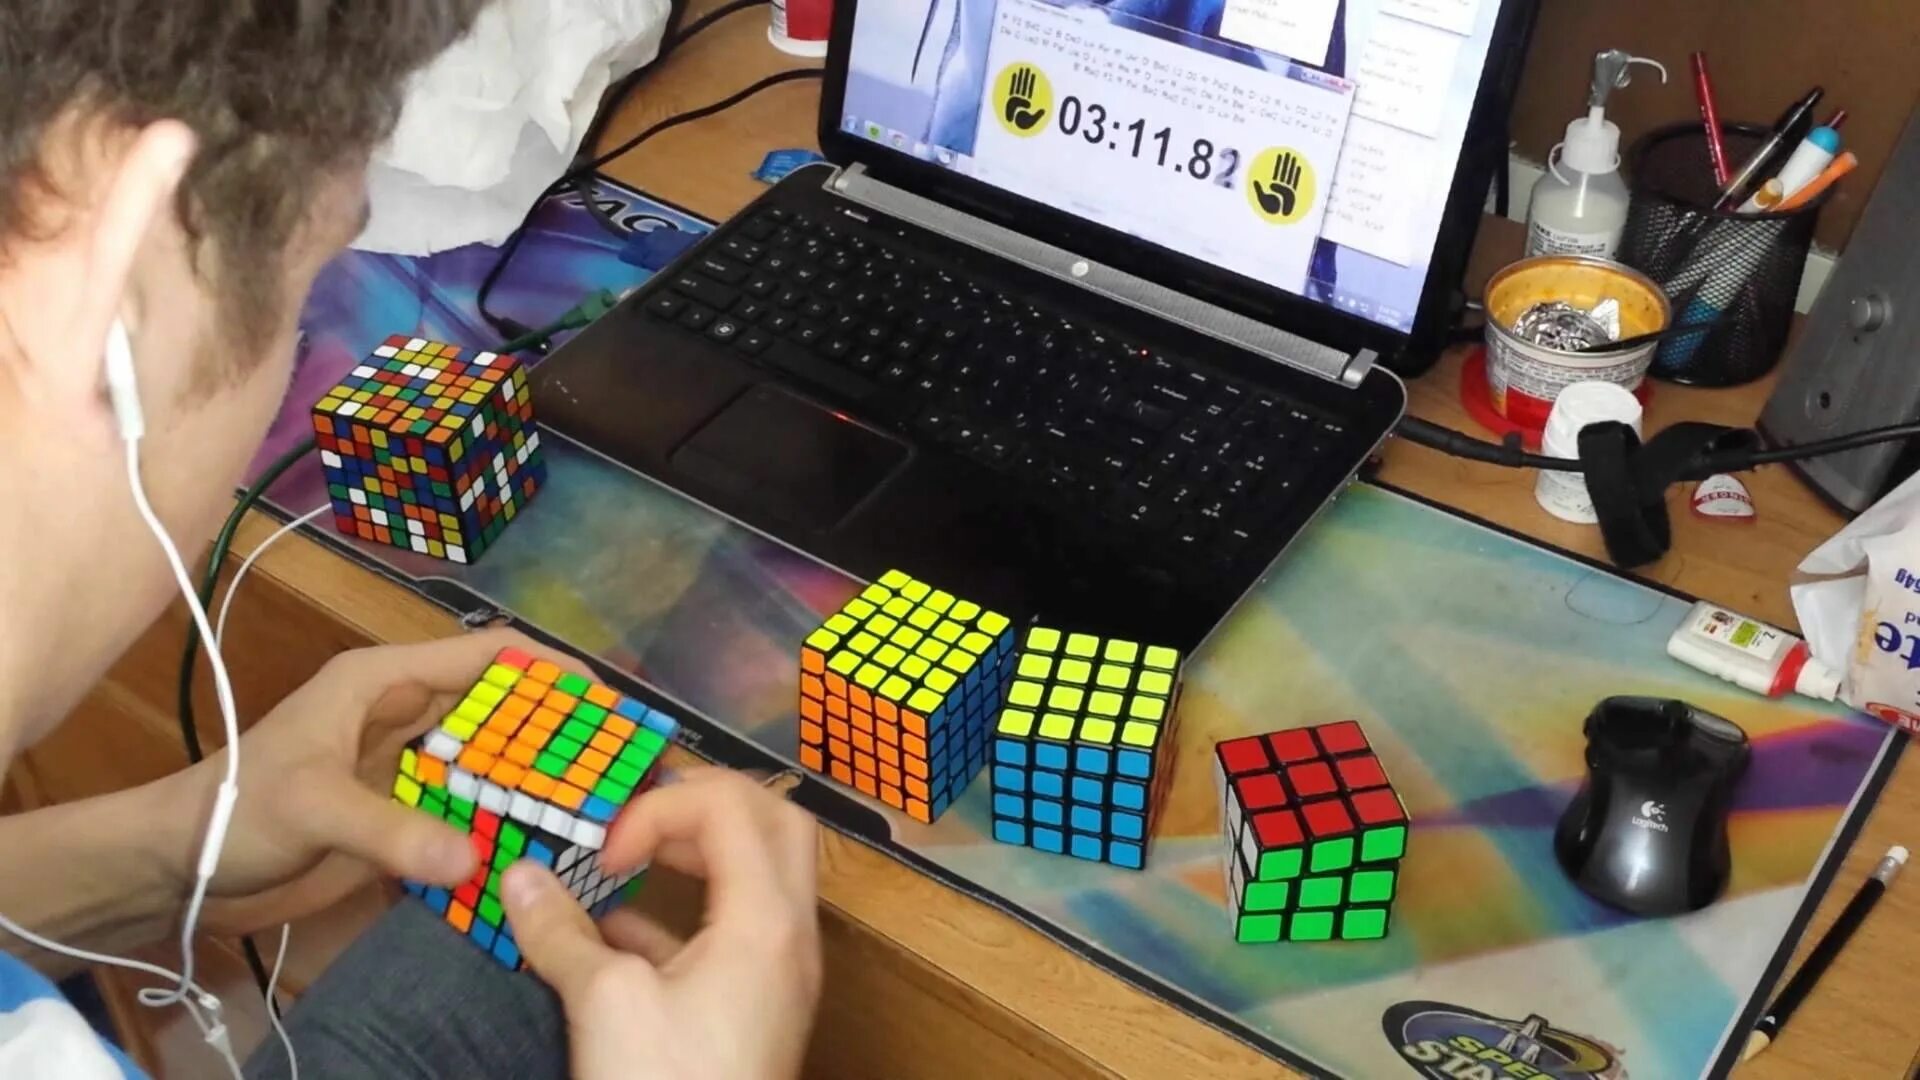 Мировой рекорд кубик Рубика 2x2. Мальчик собирает кубик Рубика. Мировой рекорд по собиранию кубика Рубика.